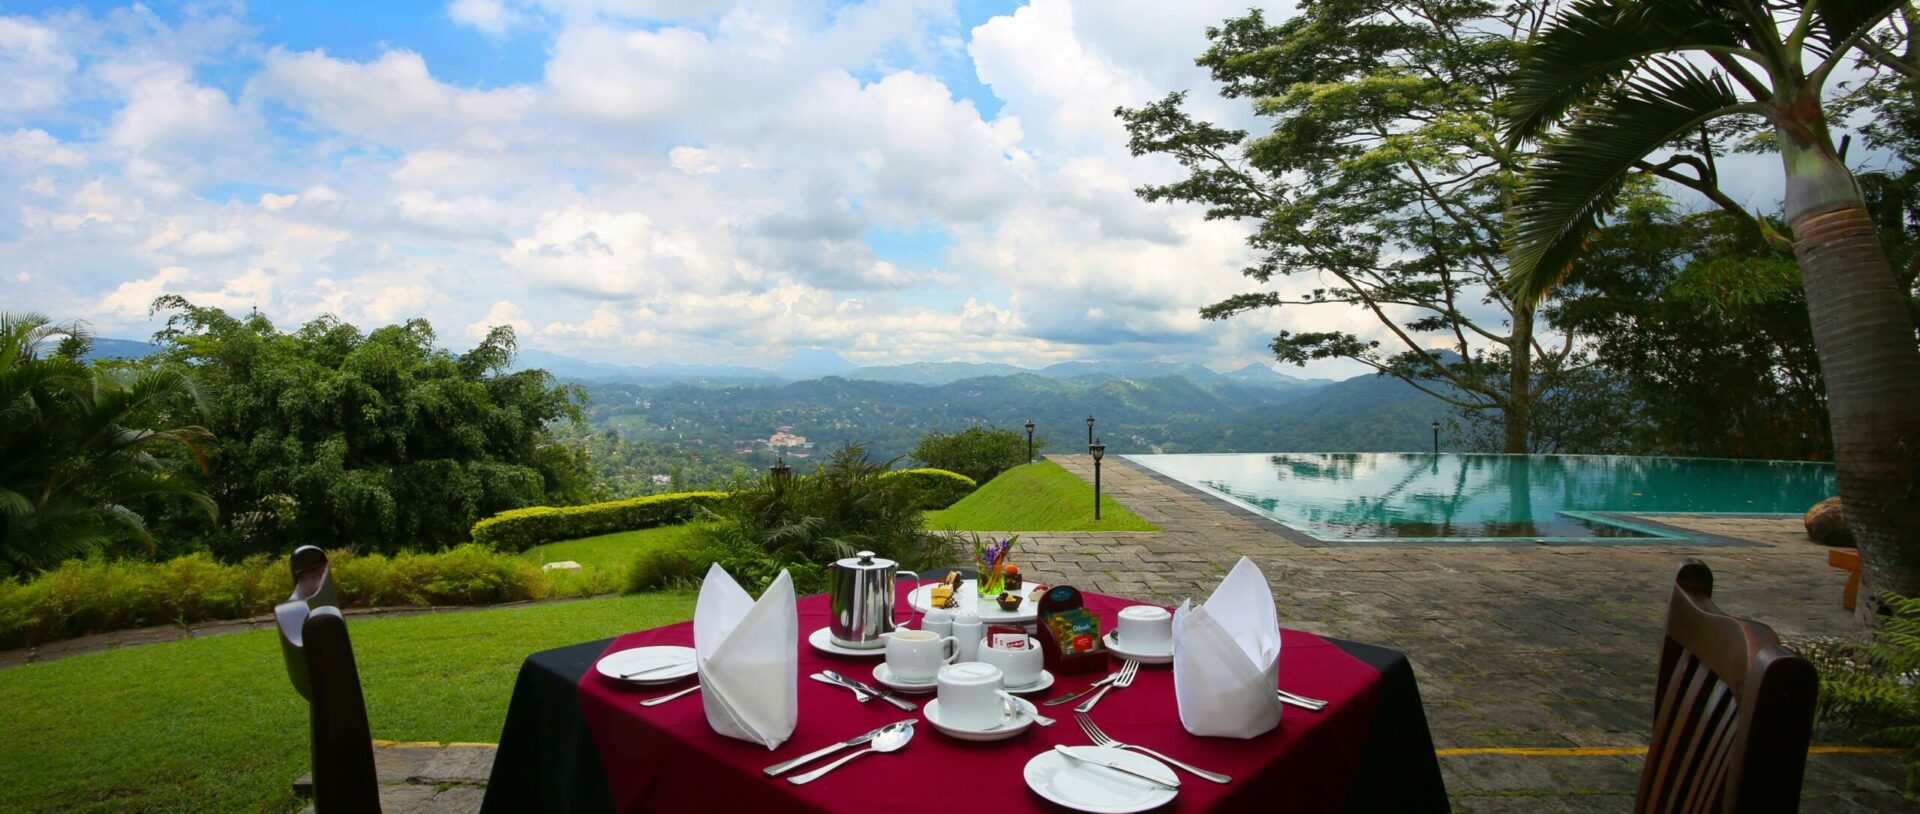 Randholee Resort Sri Lanka trincomalee original asia rondreis sri lanka malediven tafel